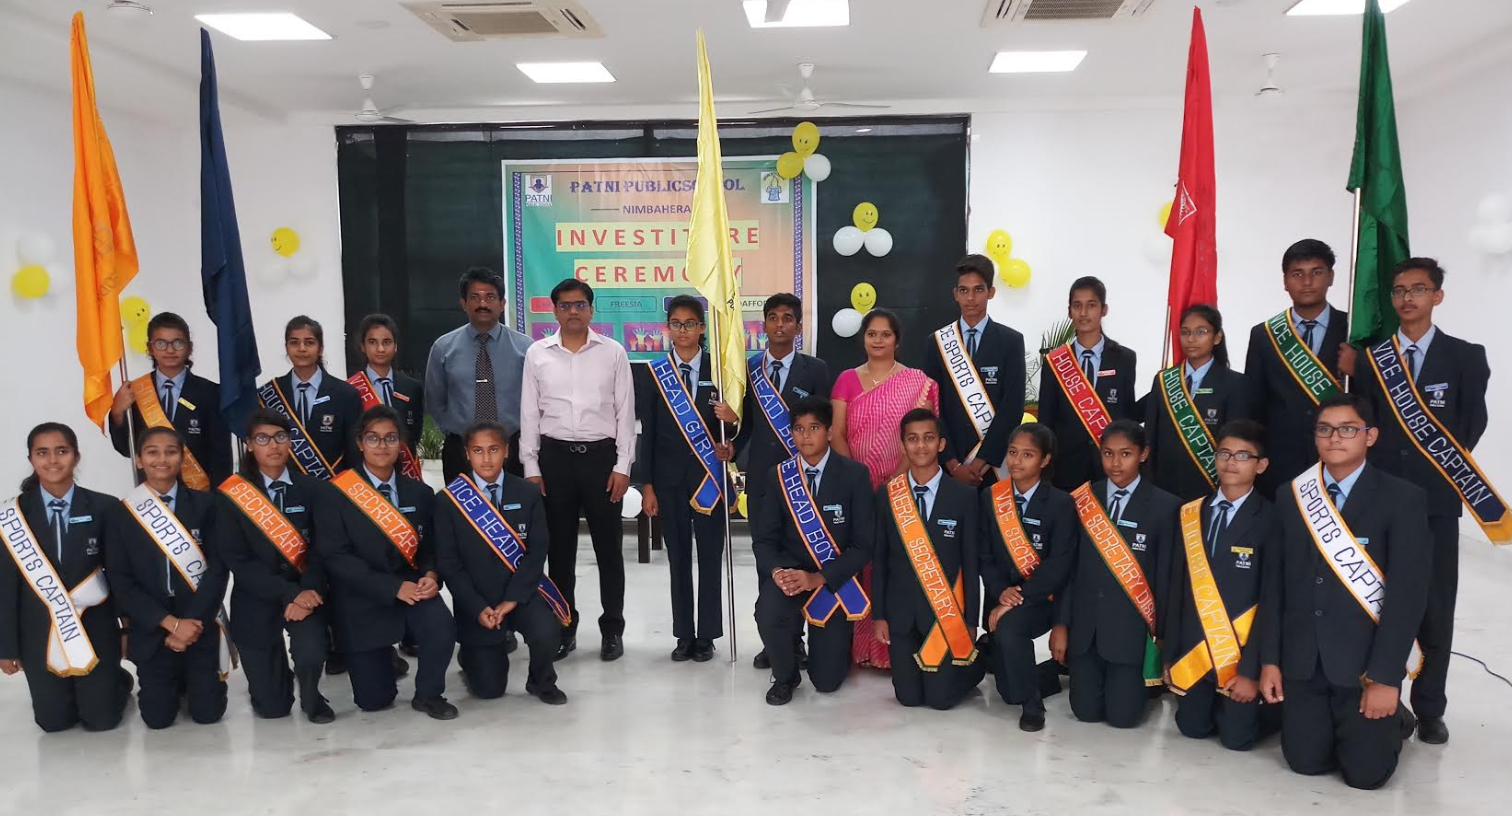 Investiture Ceremony organized at Patni Public School